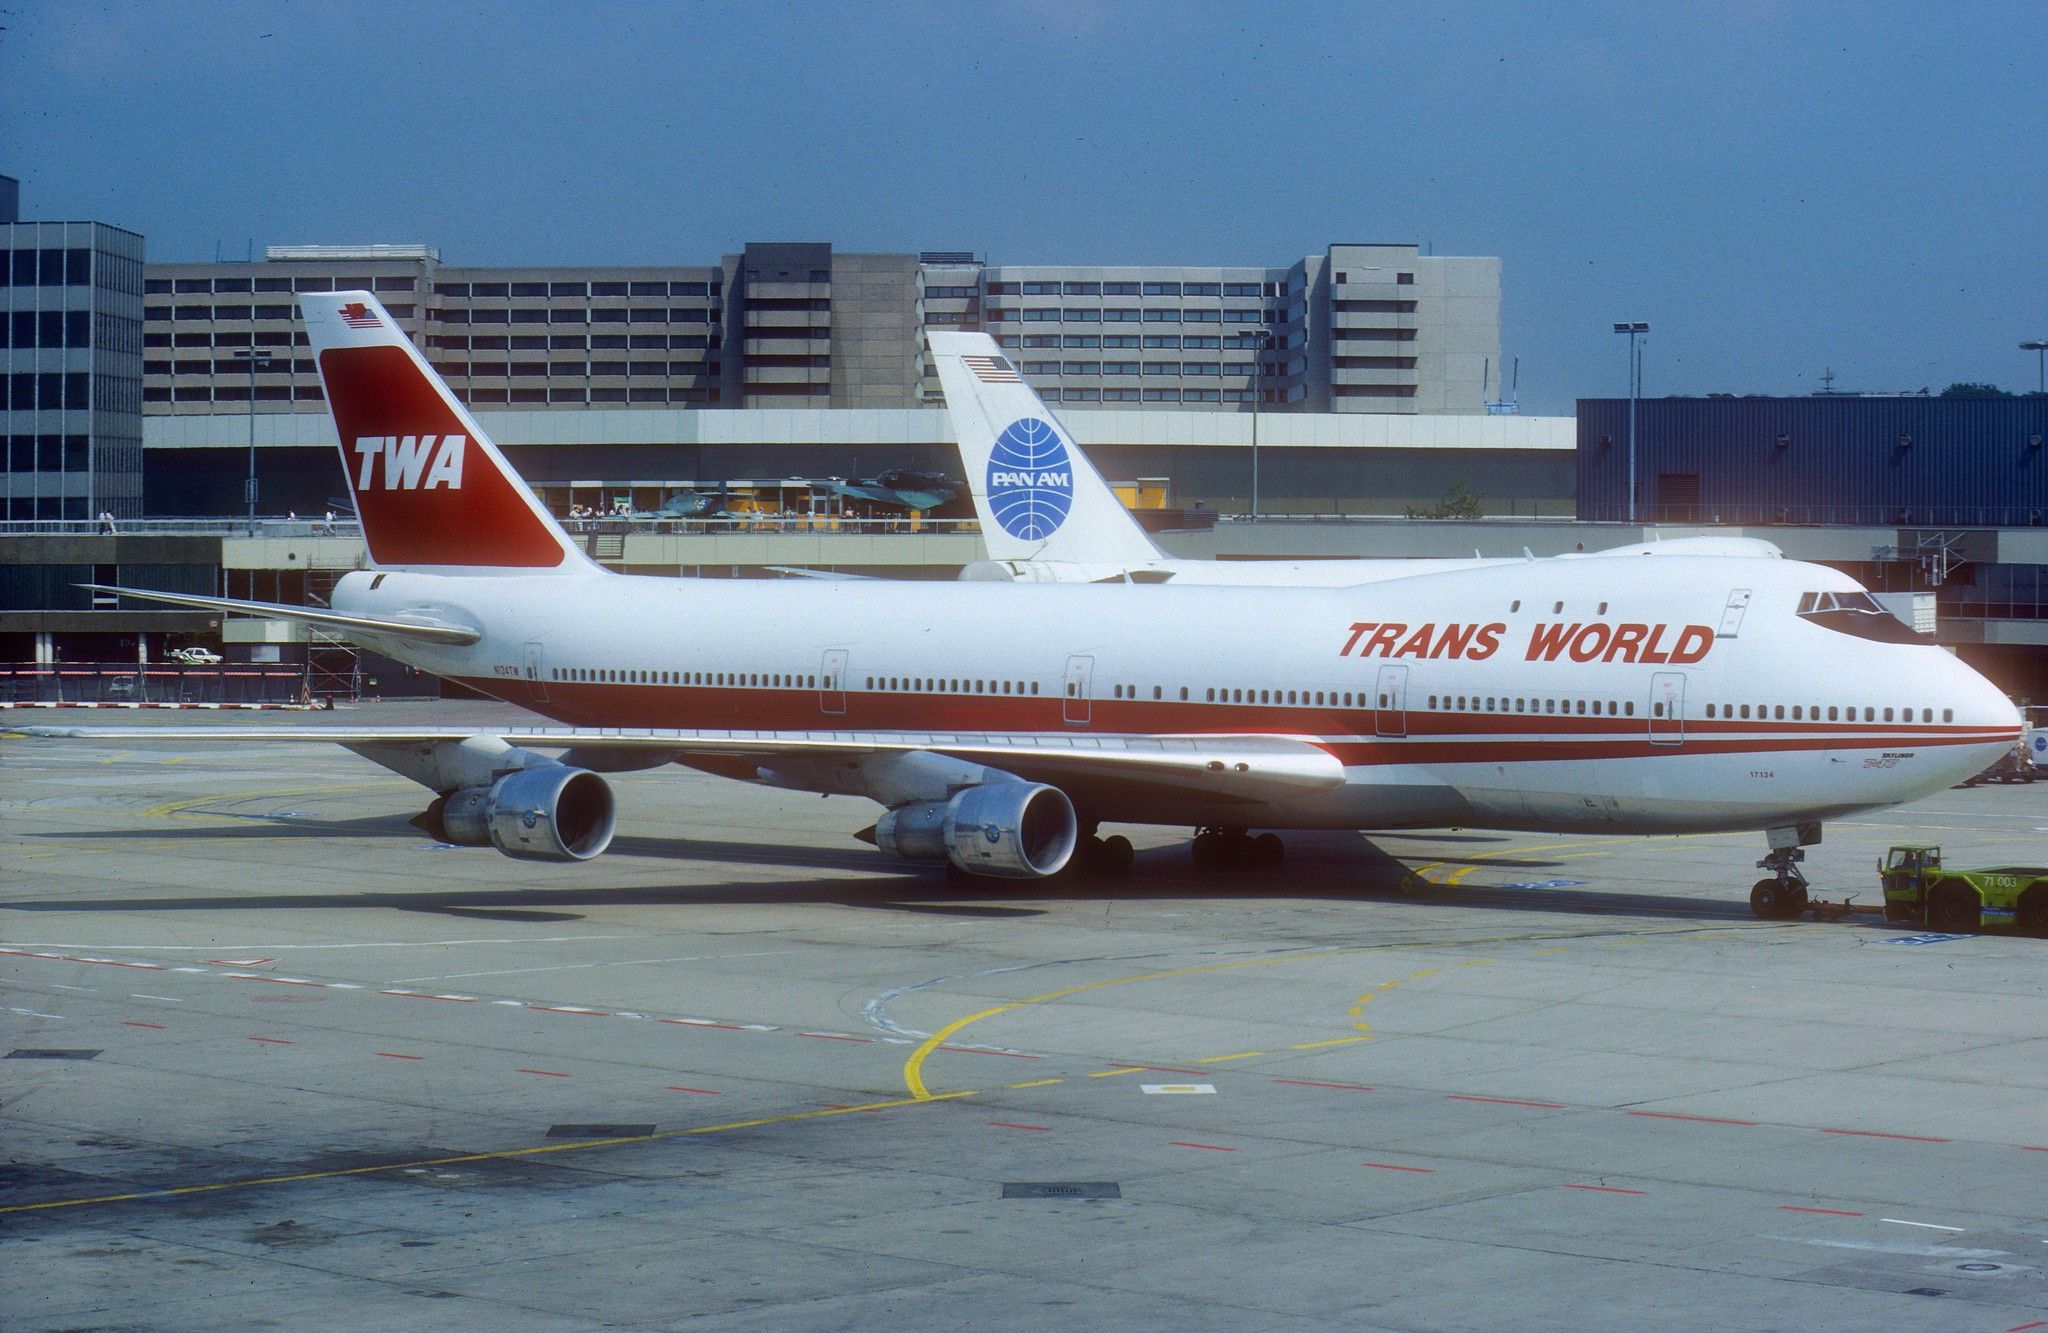 TWA Boeing 747-100